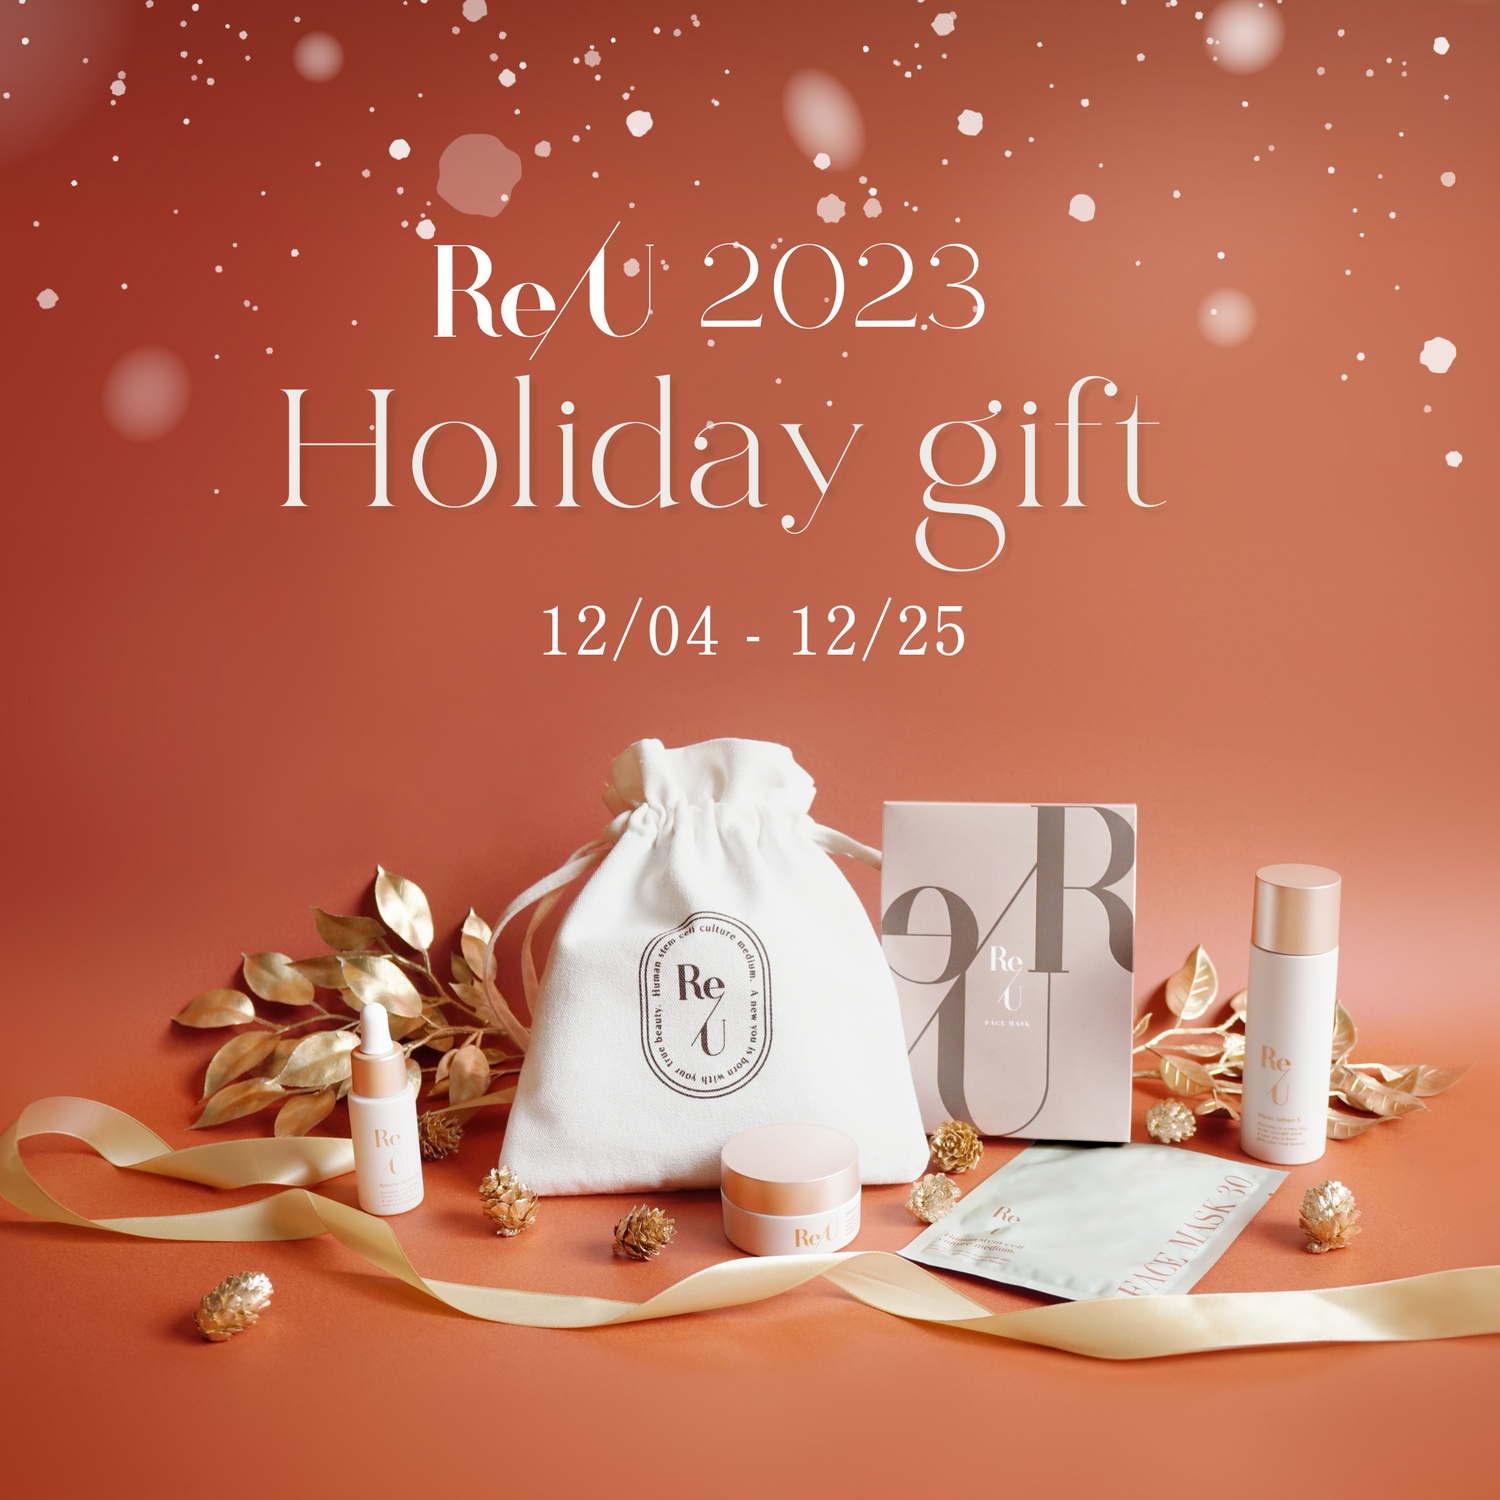 Re/U 2023 Holiday gift